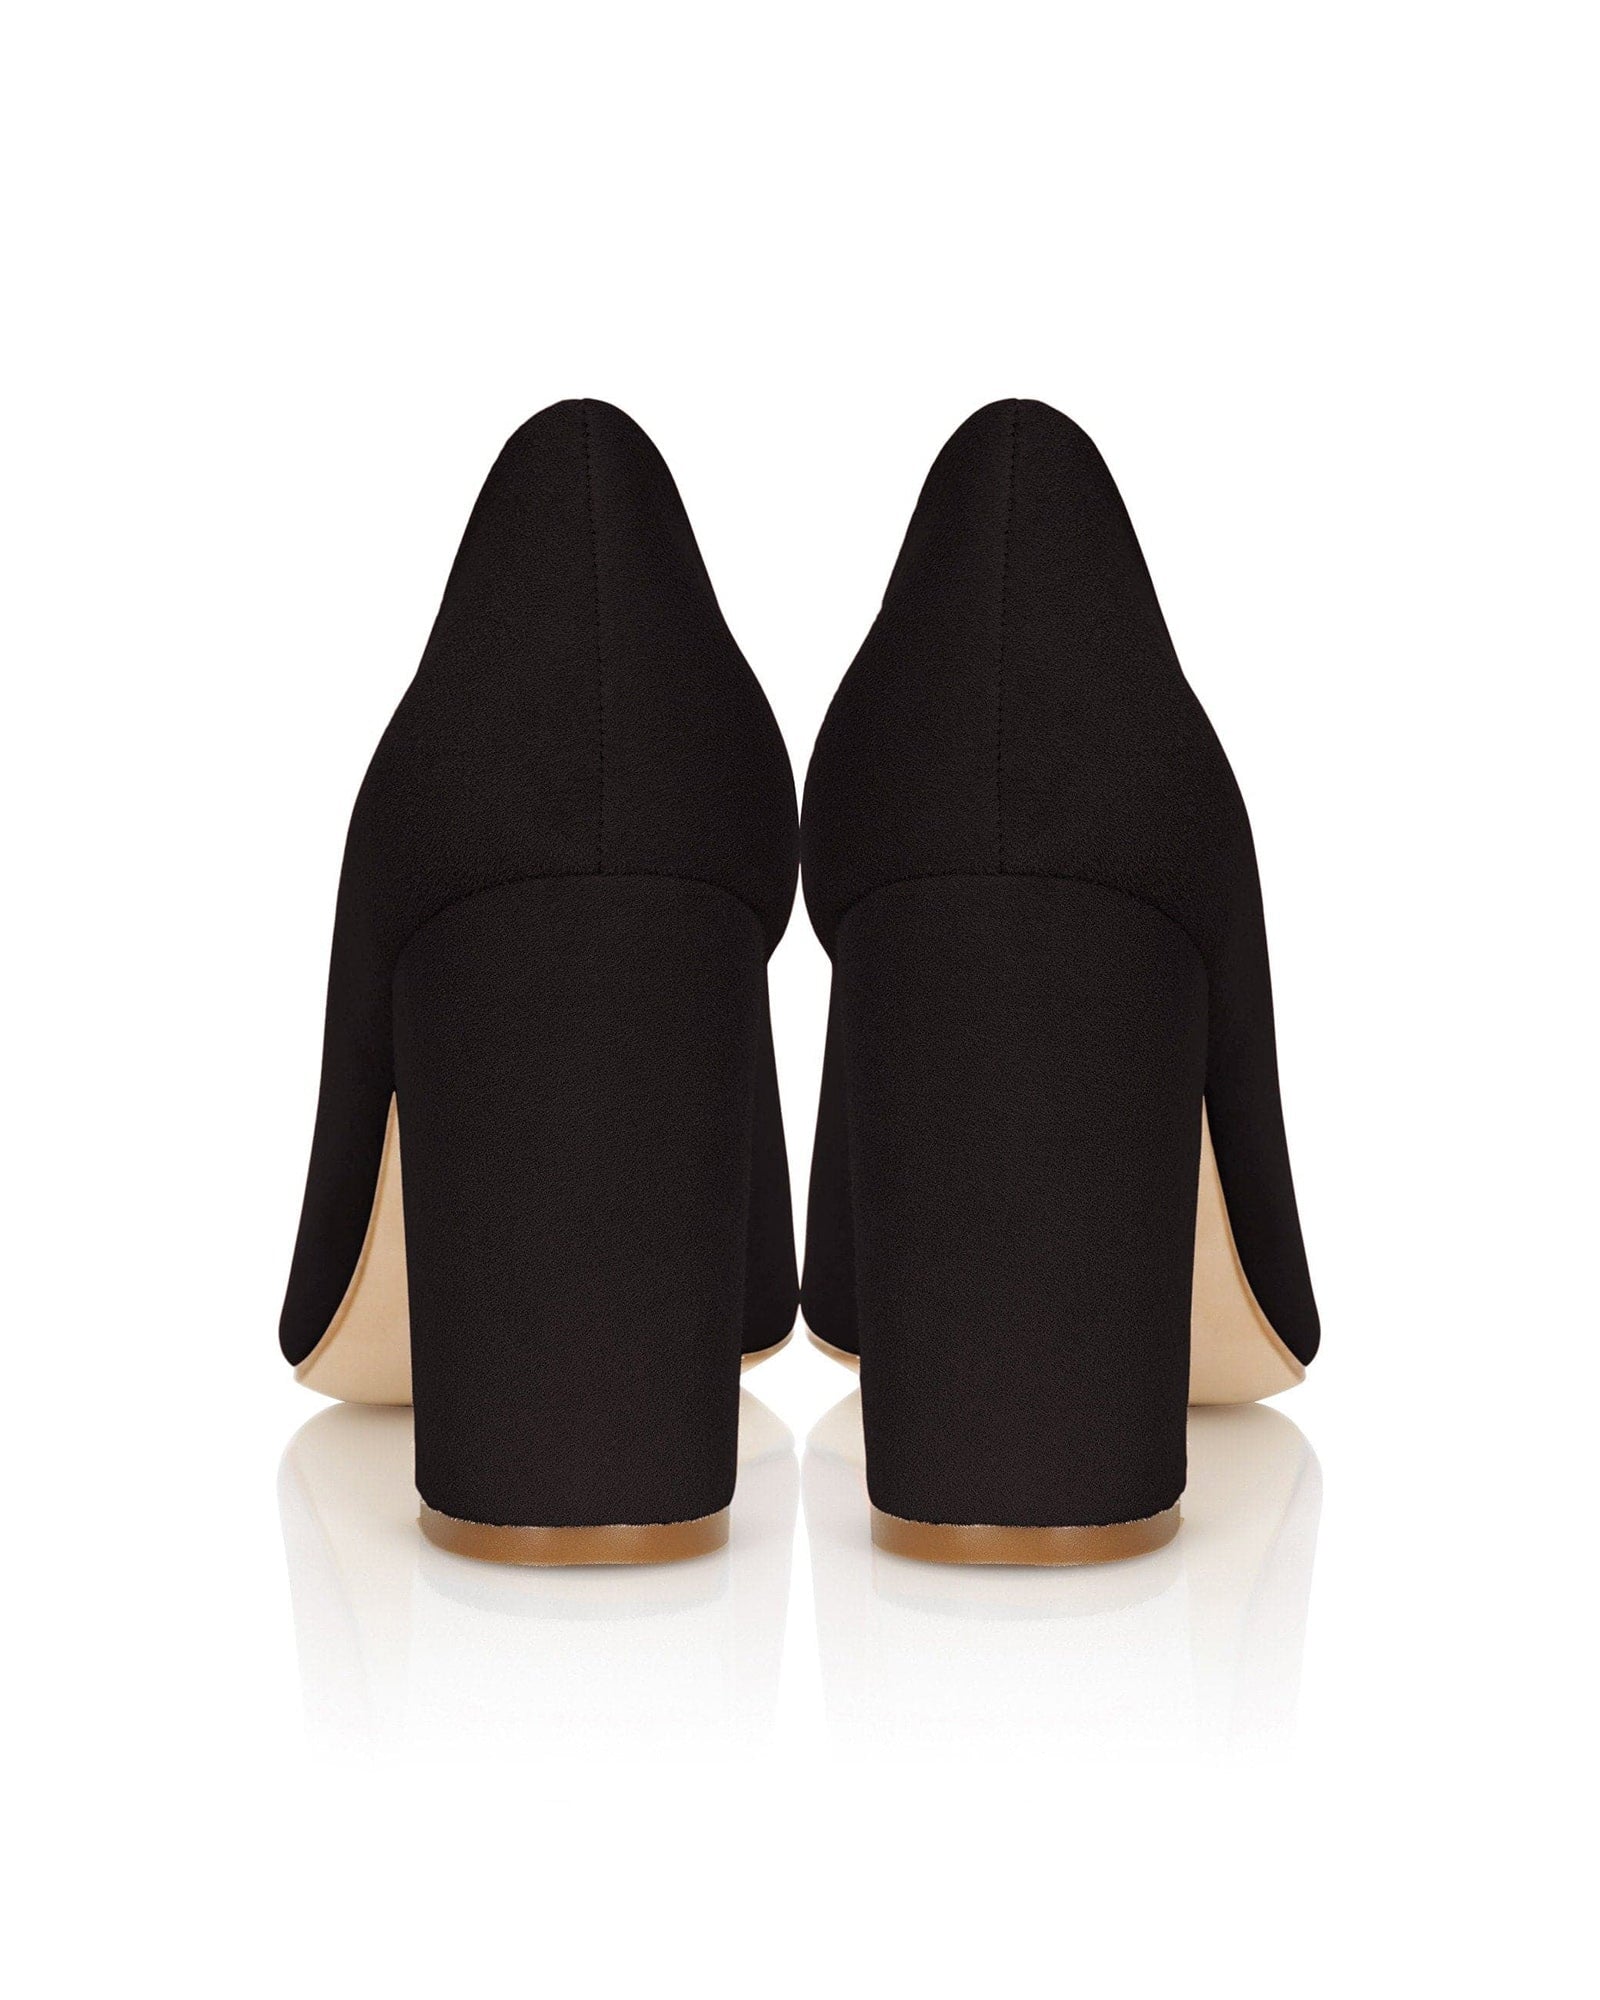 Mia Jet Black Fashion Shoe Black Block Heel Court Shoe  image